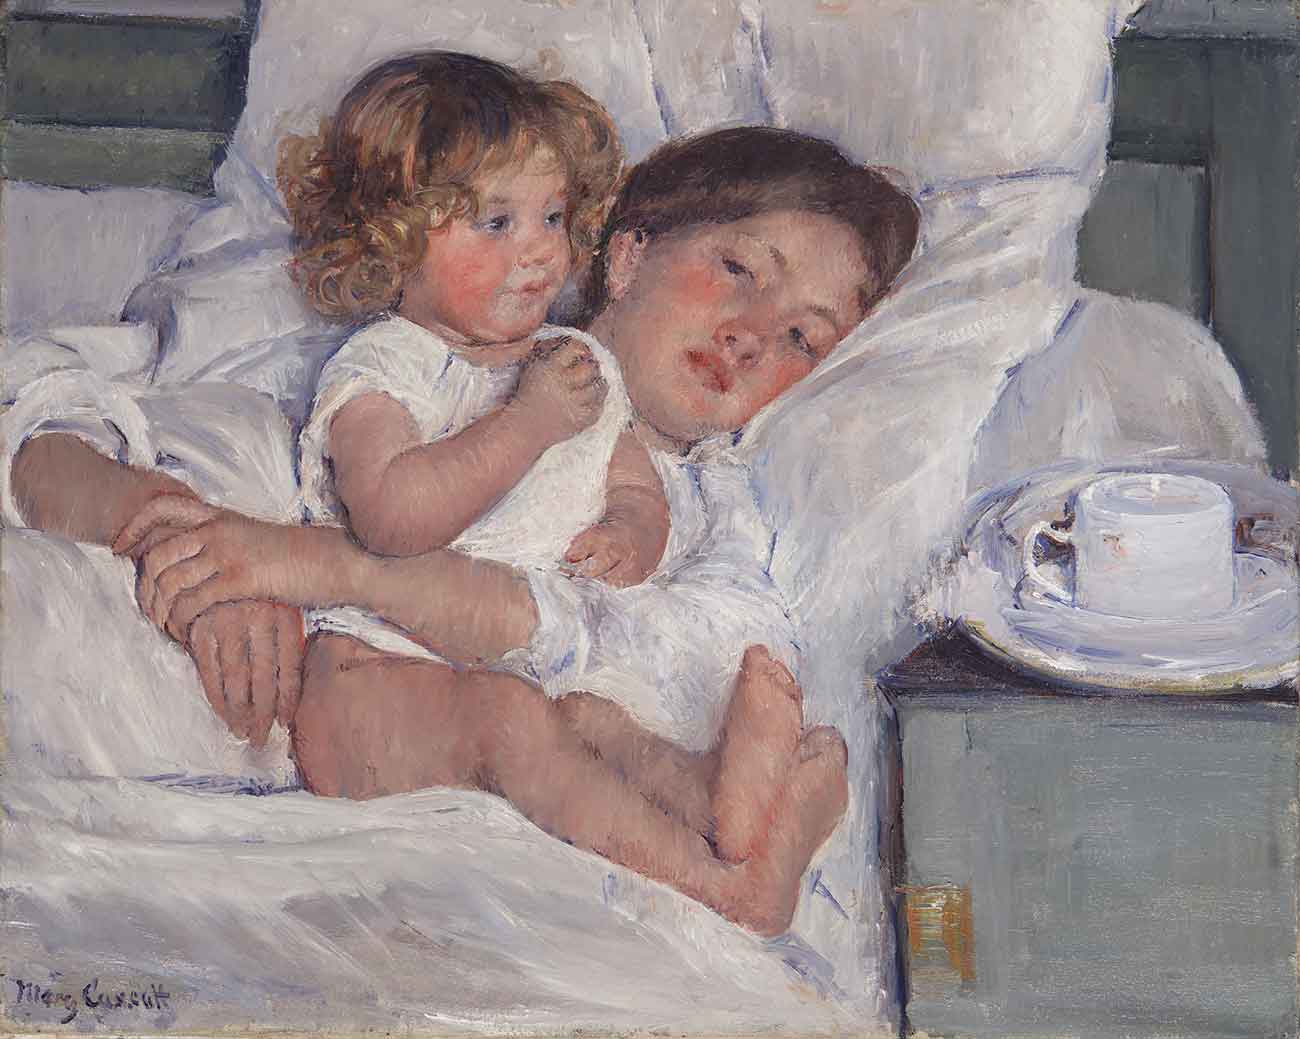 Mary Cassatt (1844-1926), Breakfast in Bed, 1897. The Huntington Library, Art Museum, and Botanical Gardens. Gift of the Virginia Steele Scott Foundation.